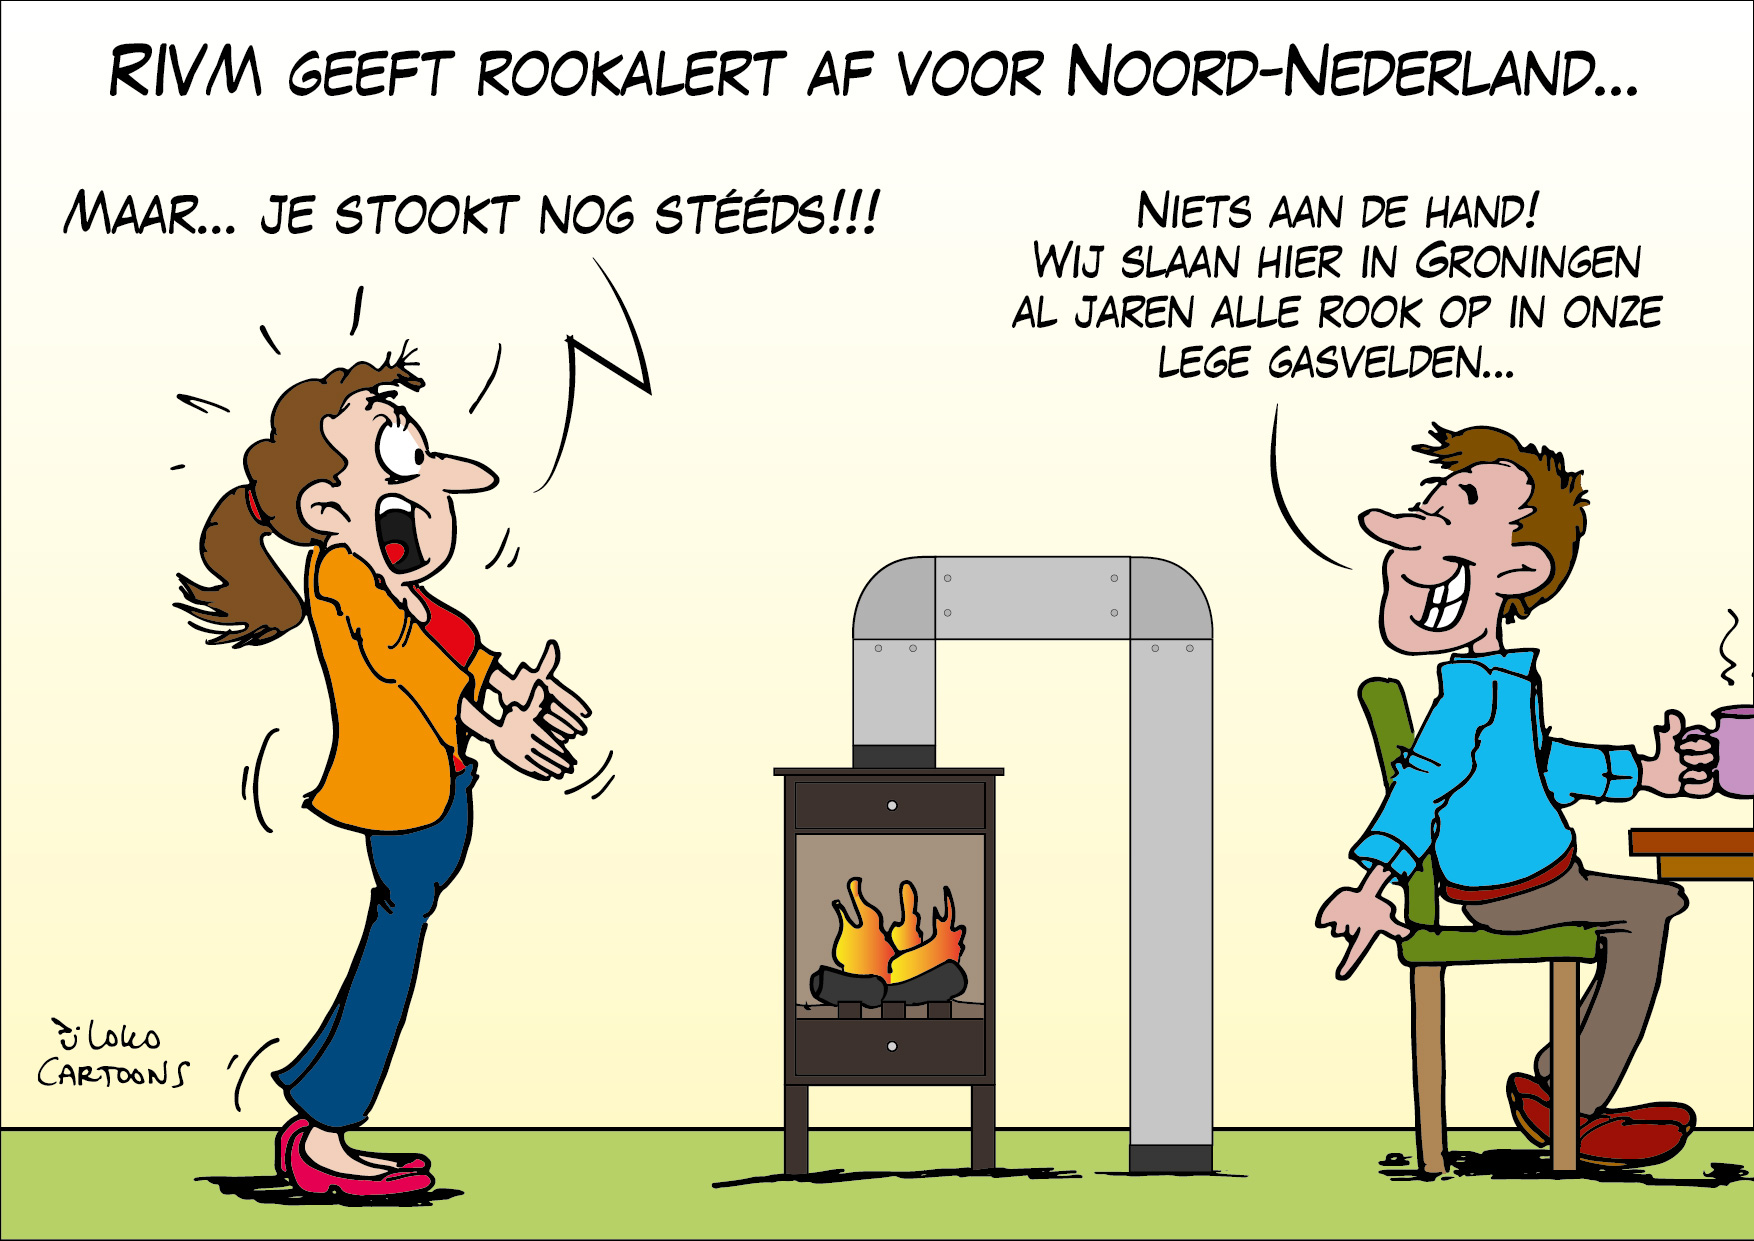 RIVM geeft rookalert af voor Noord-Nederland…